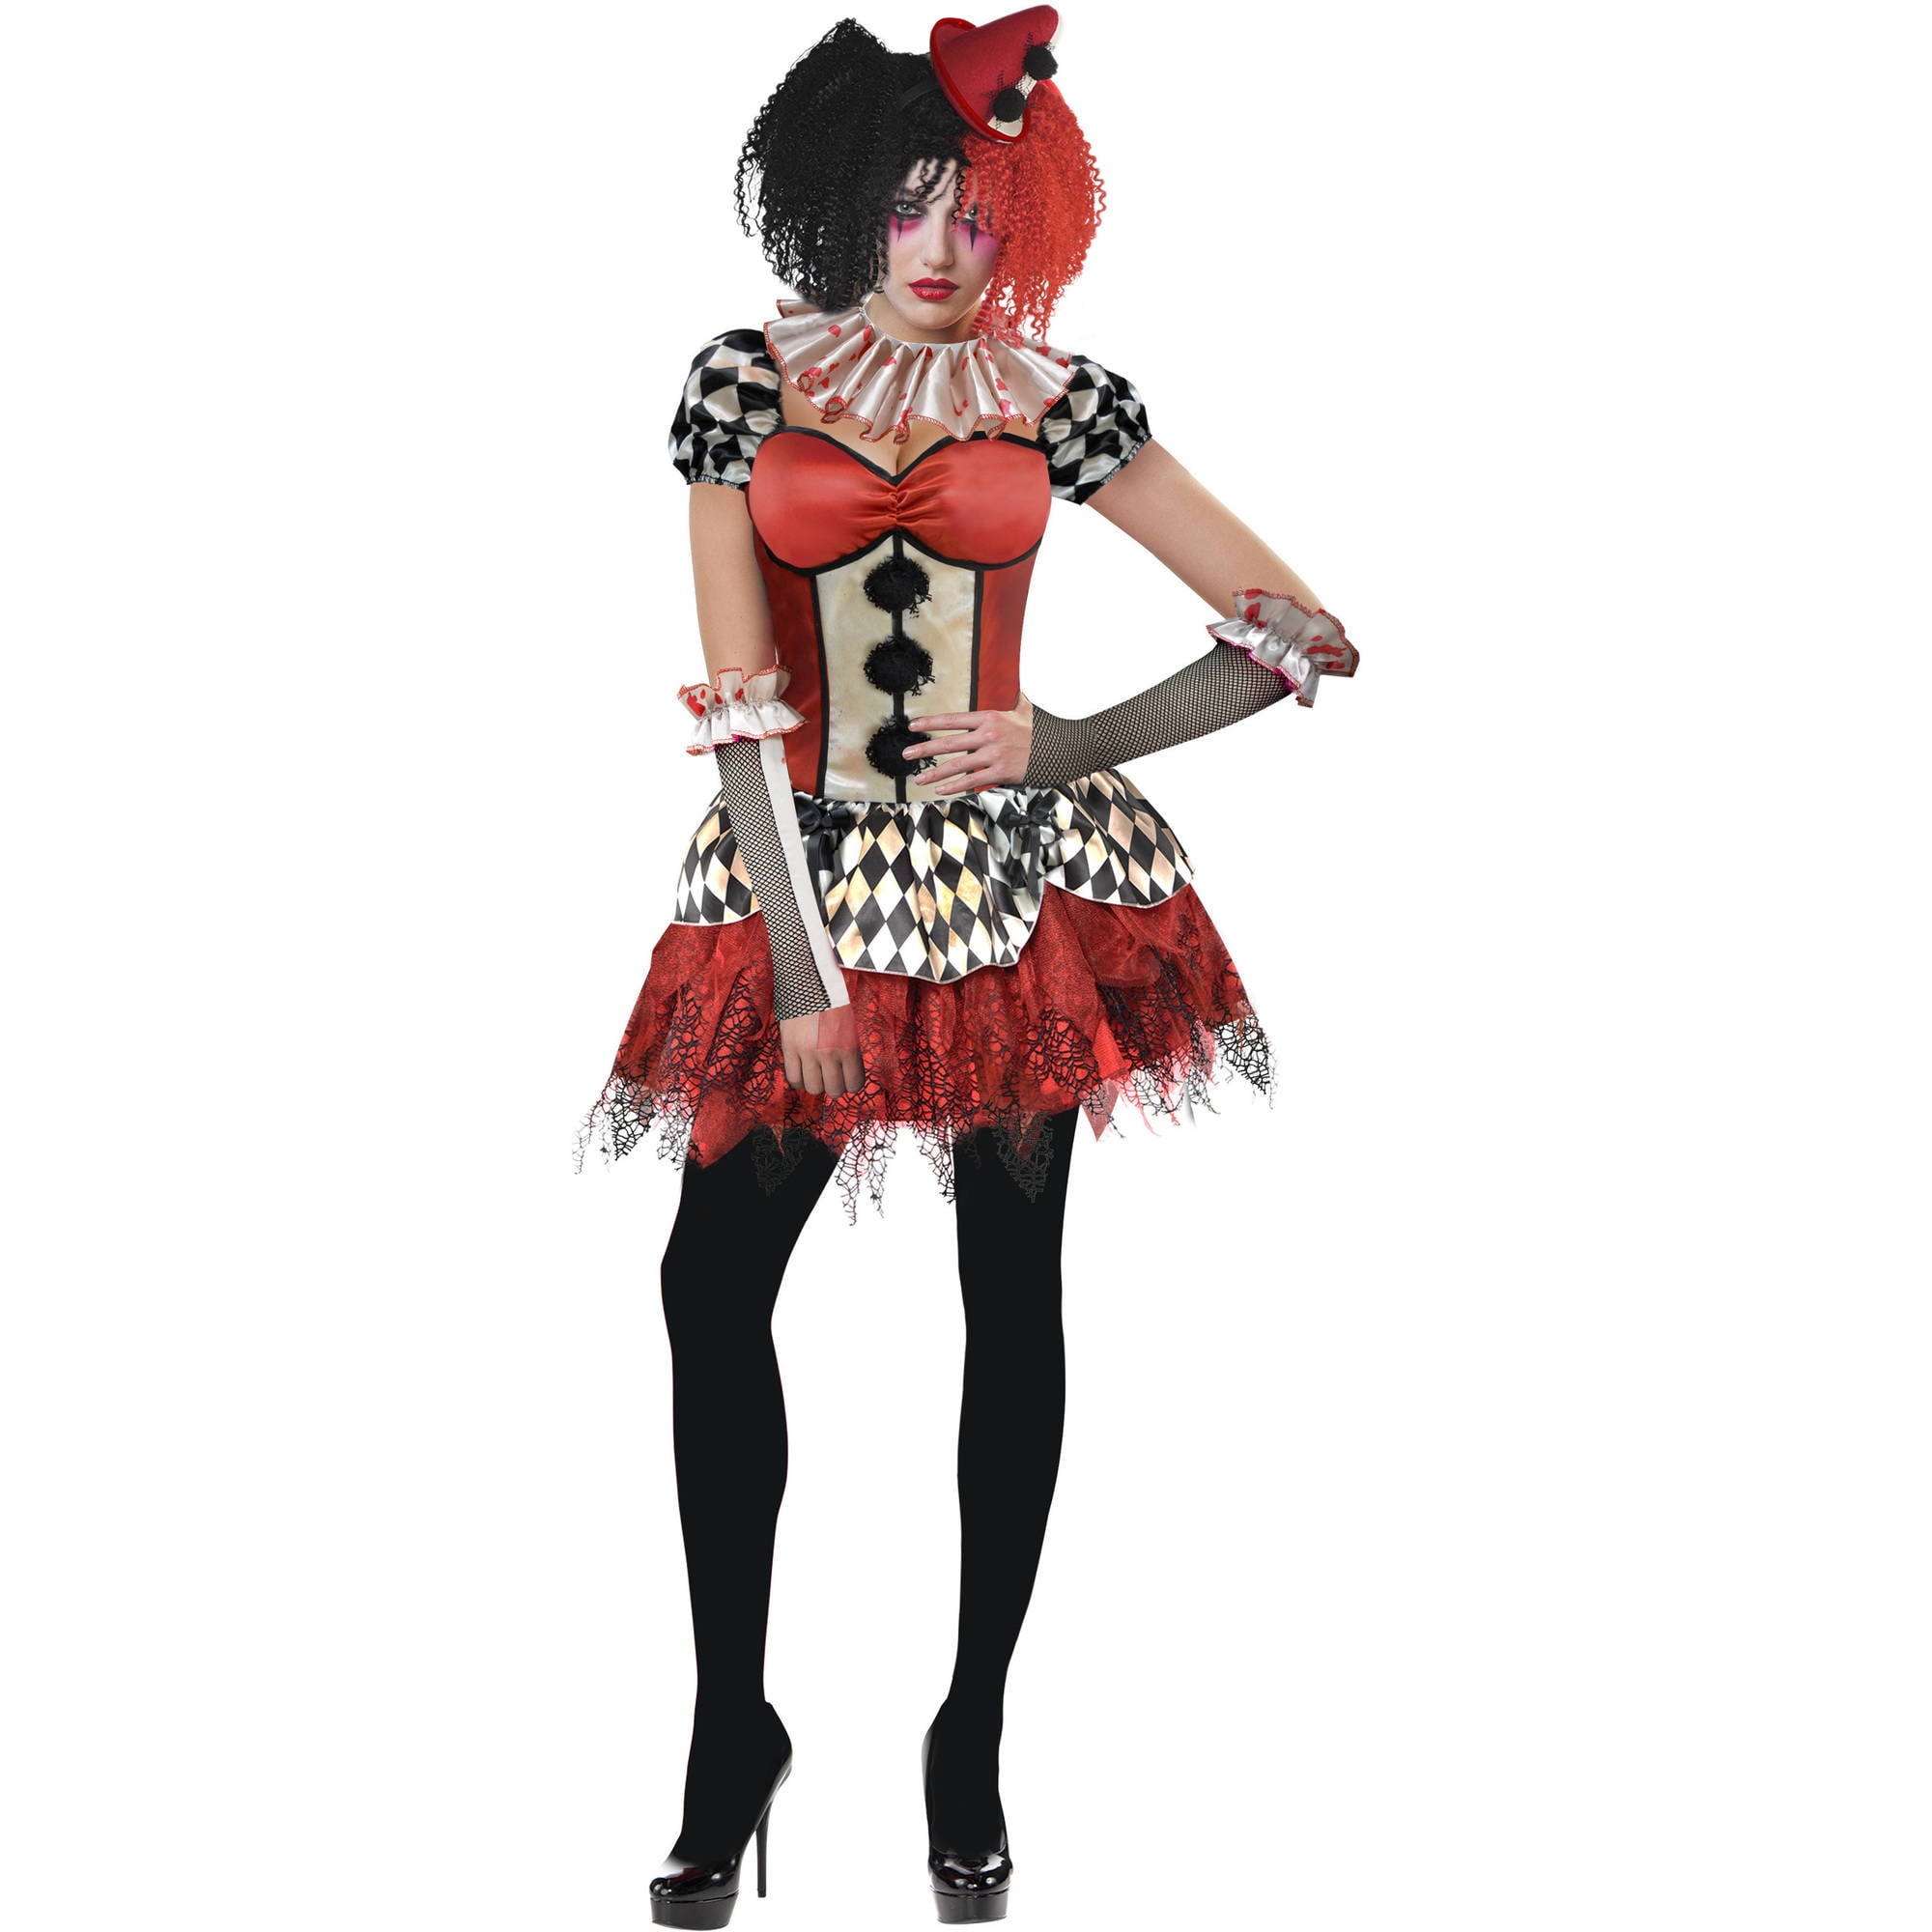 Freakshow Clown Giacca Halloween Cosplay Costume NUOVO standard per adulti fino a 42 